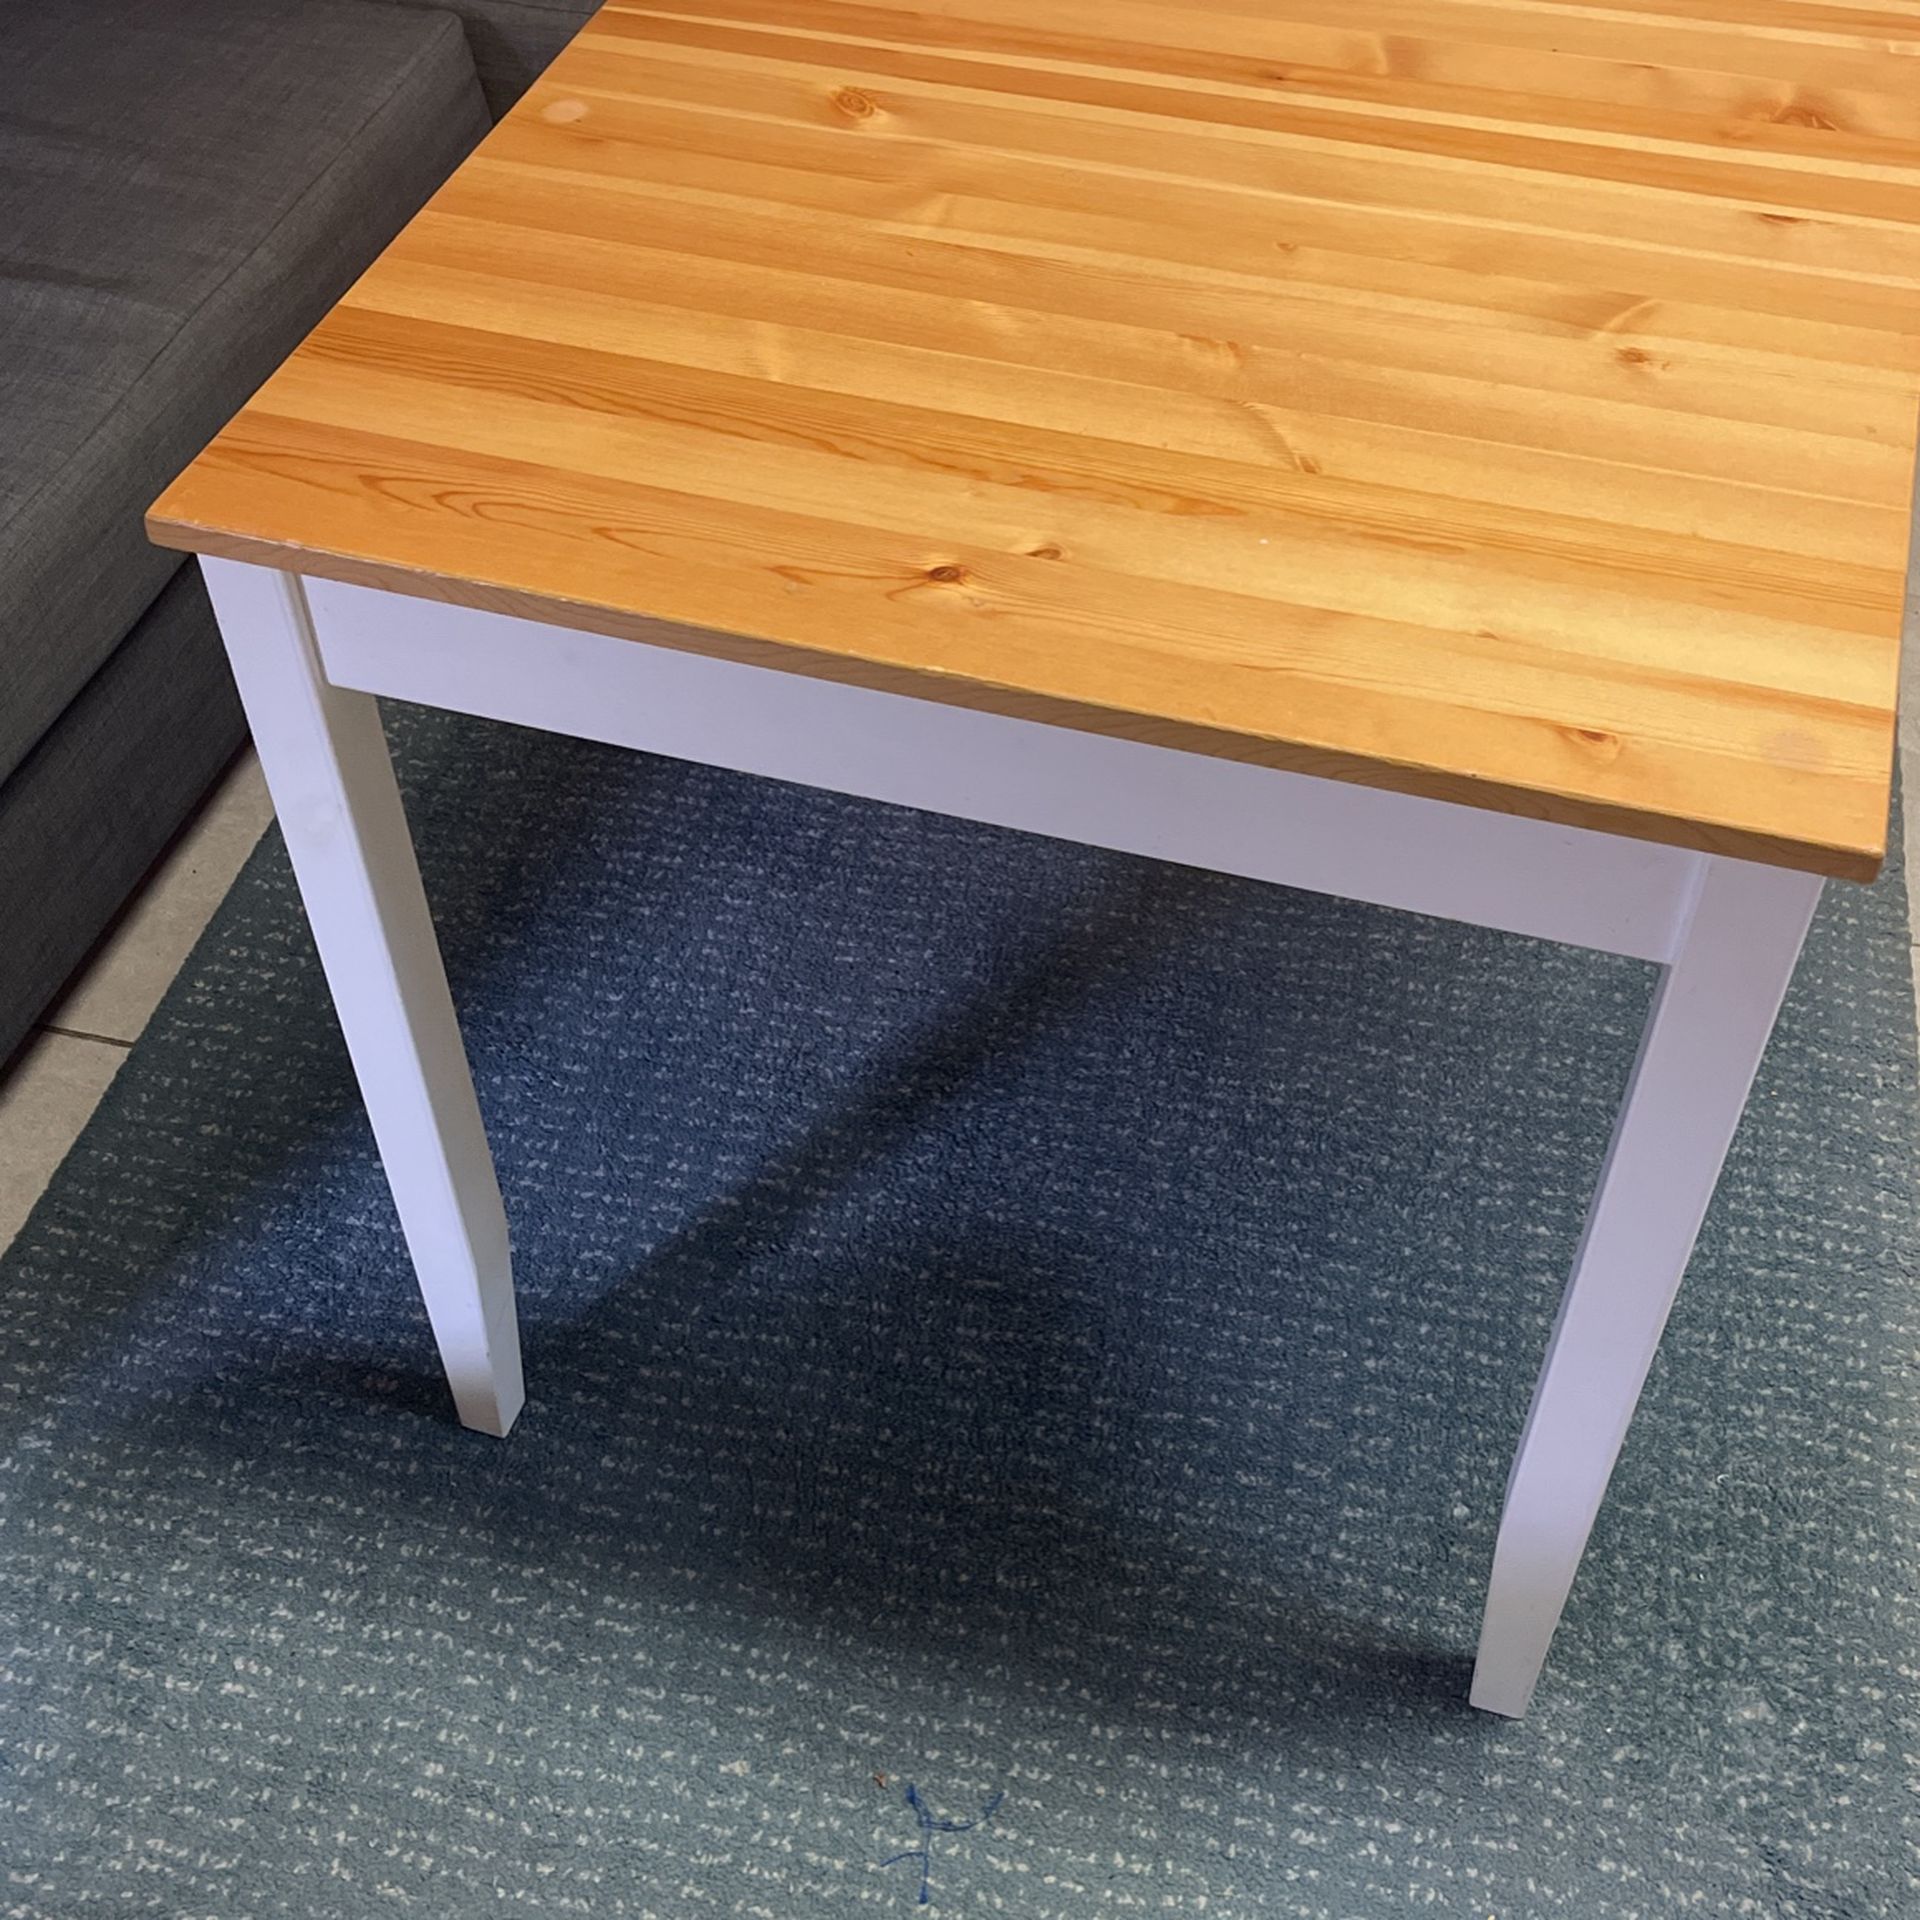 Ikea Lehrman dining table 